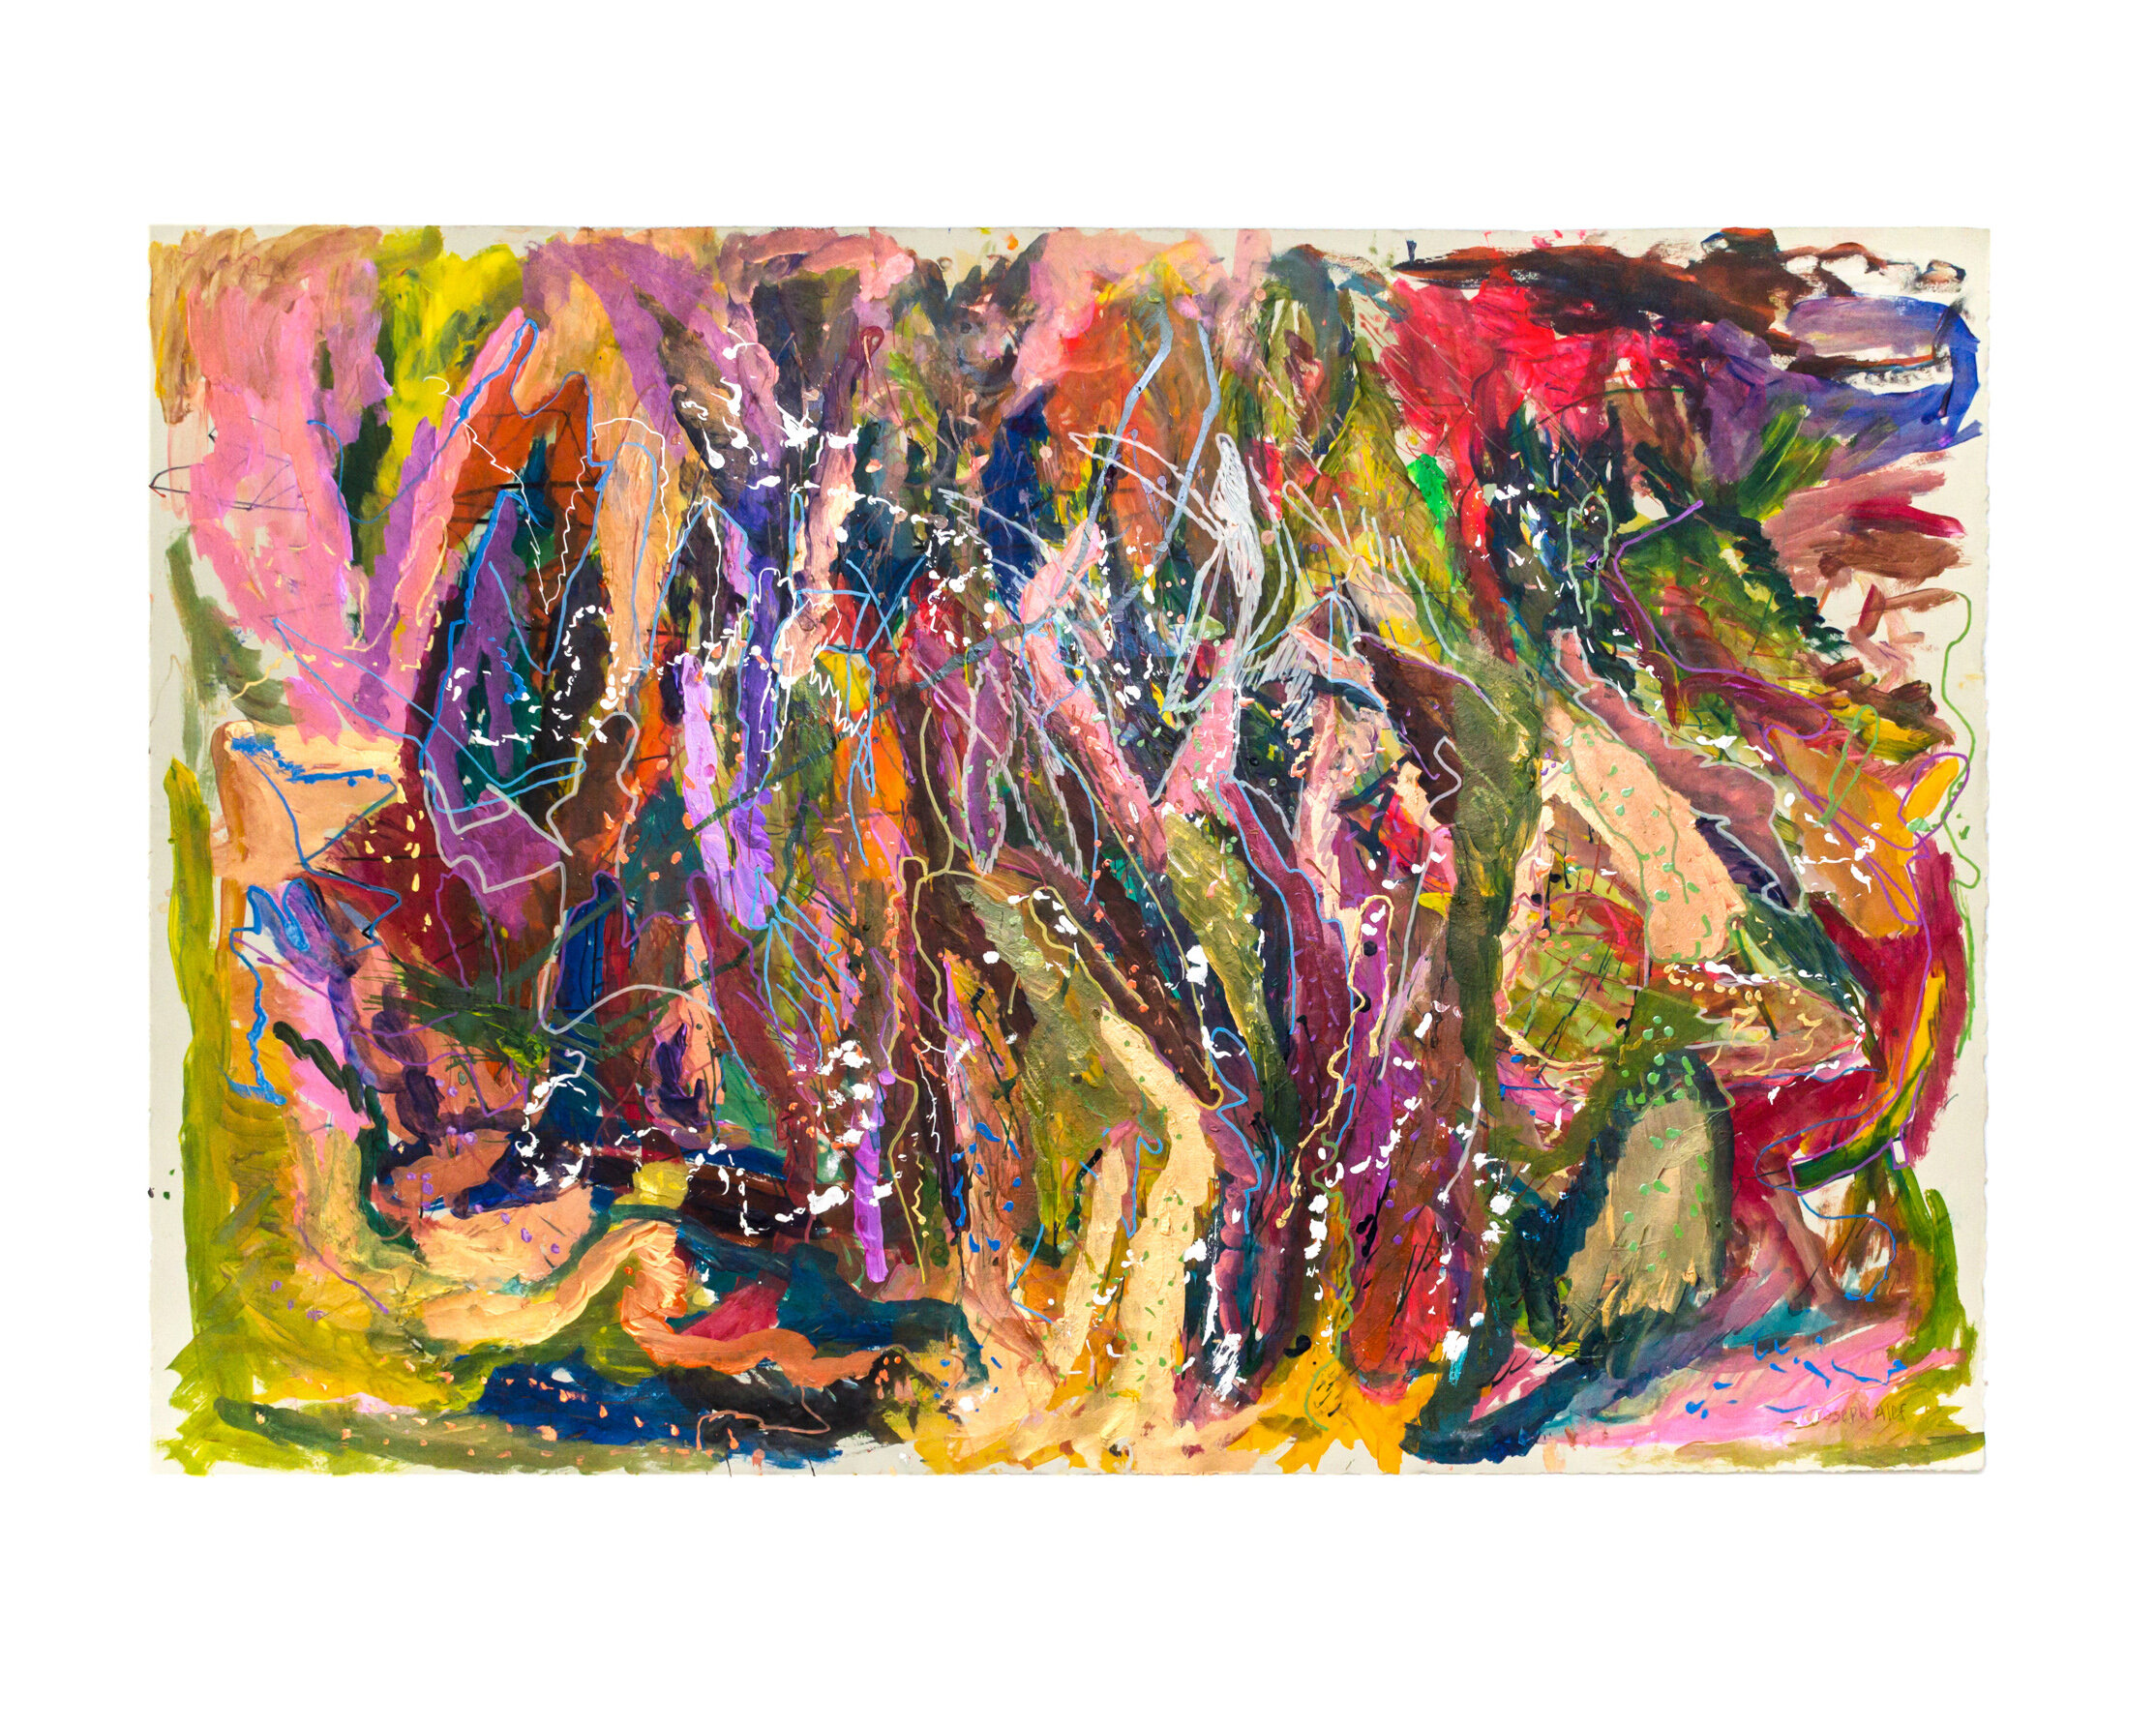 Joseph Alef, Untitled (JA 103), 2018, Acrylic on paper, 30x44.5 inches (Copy)